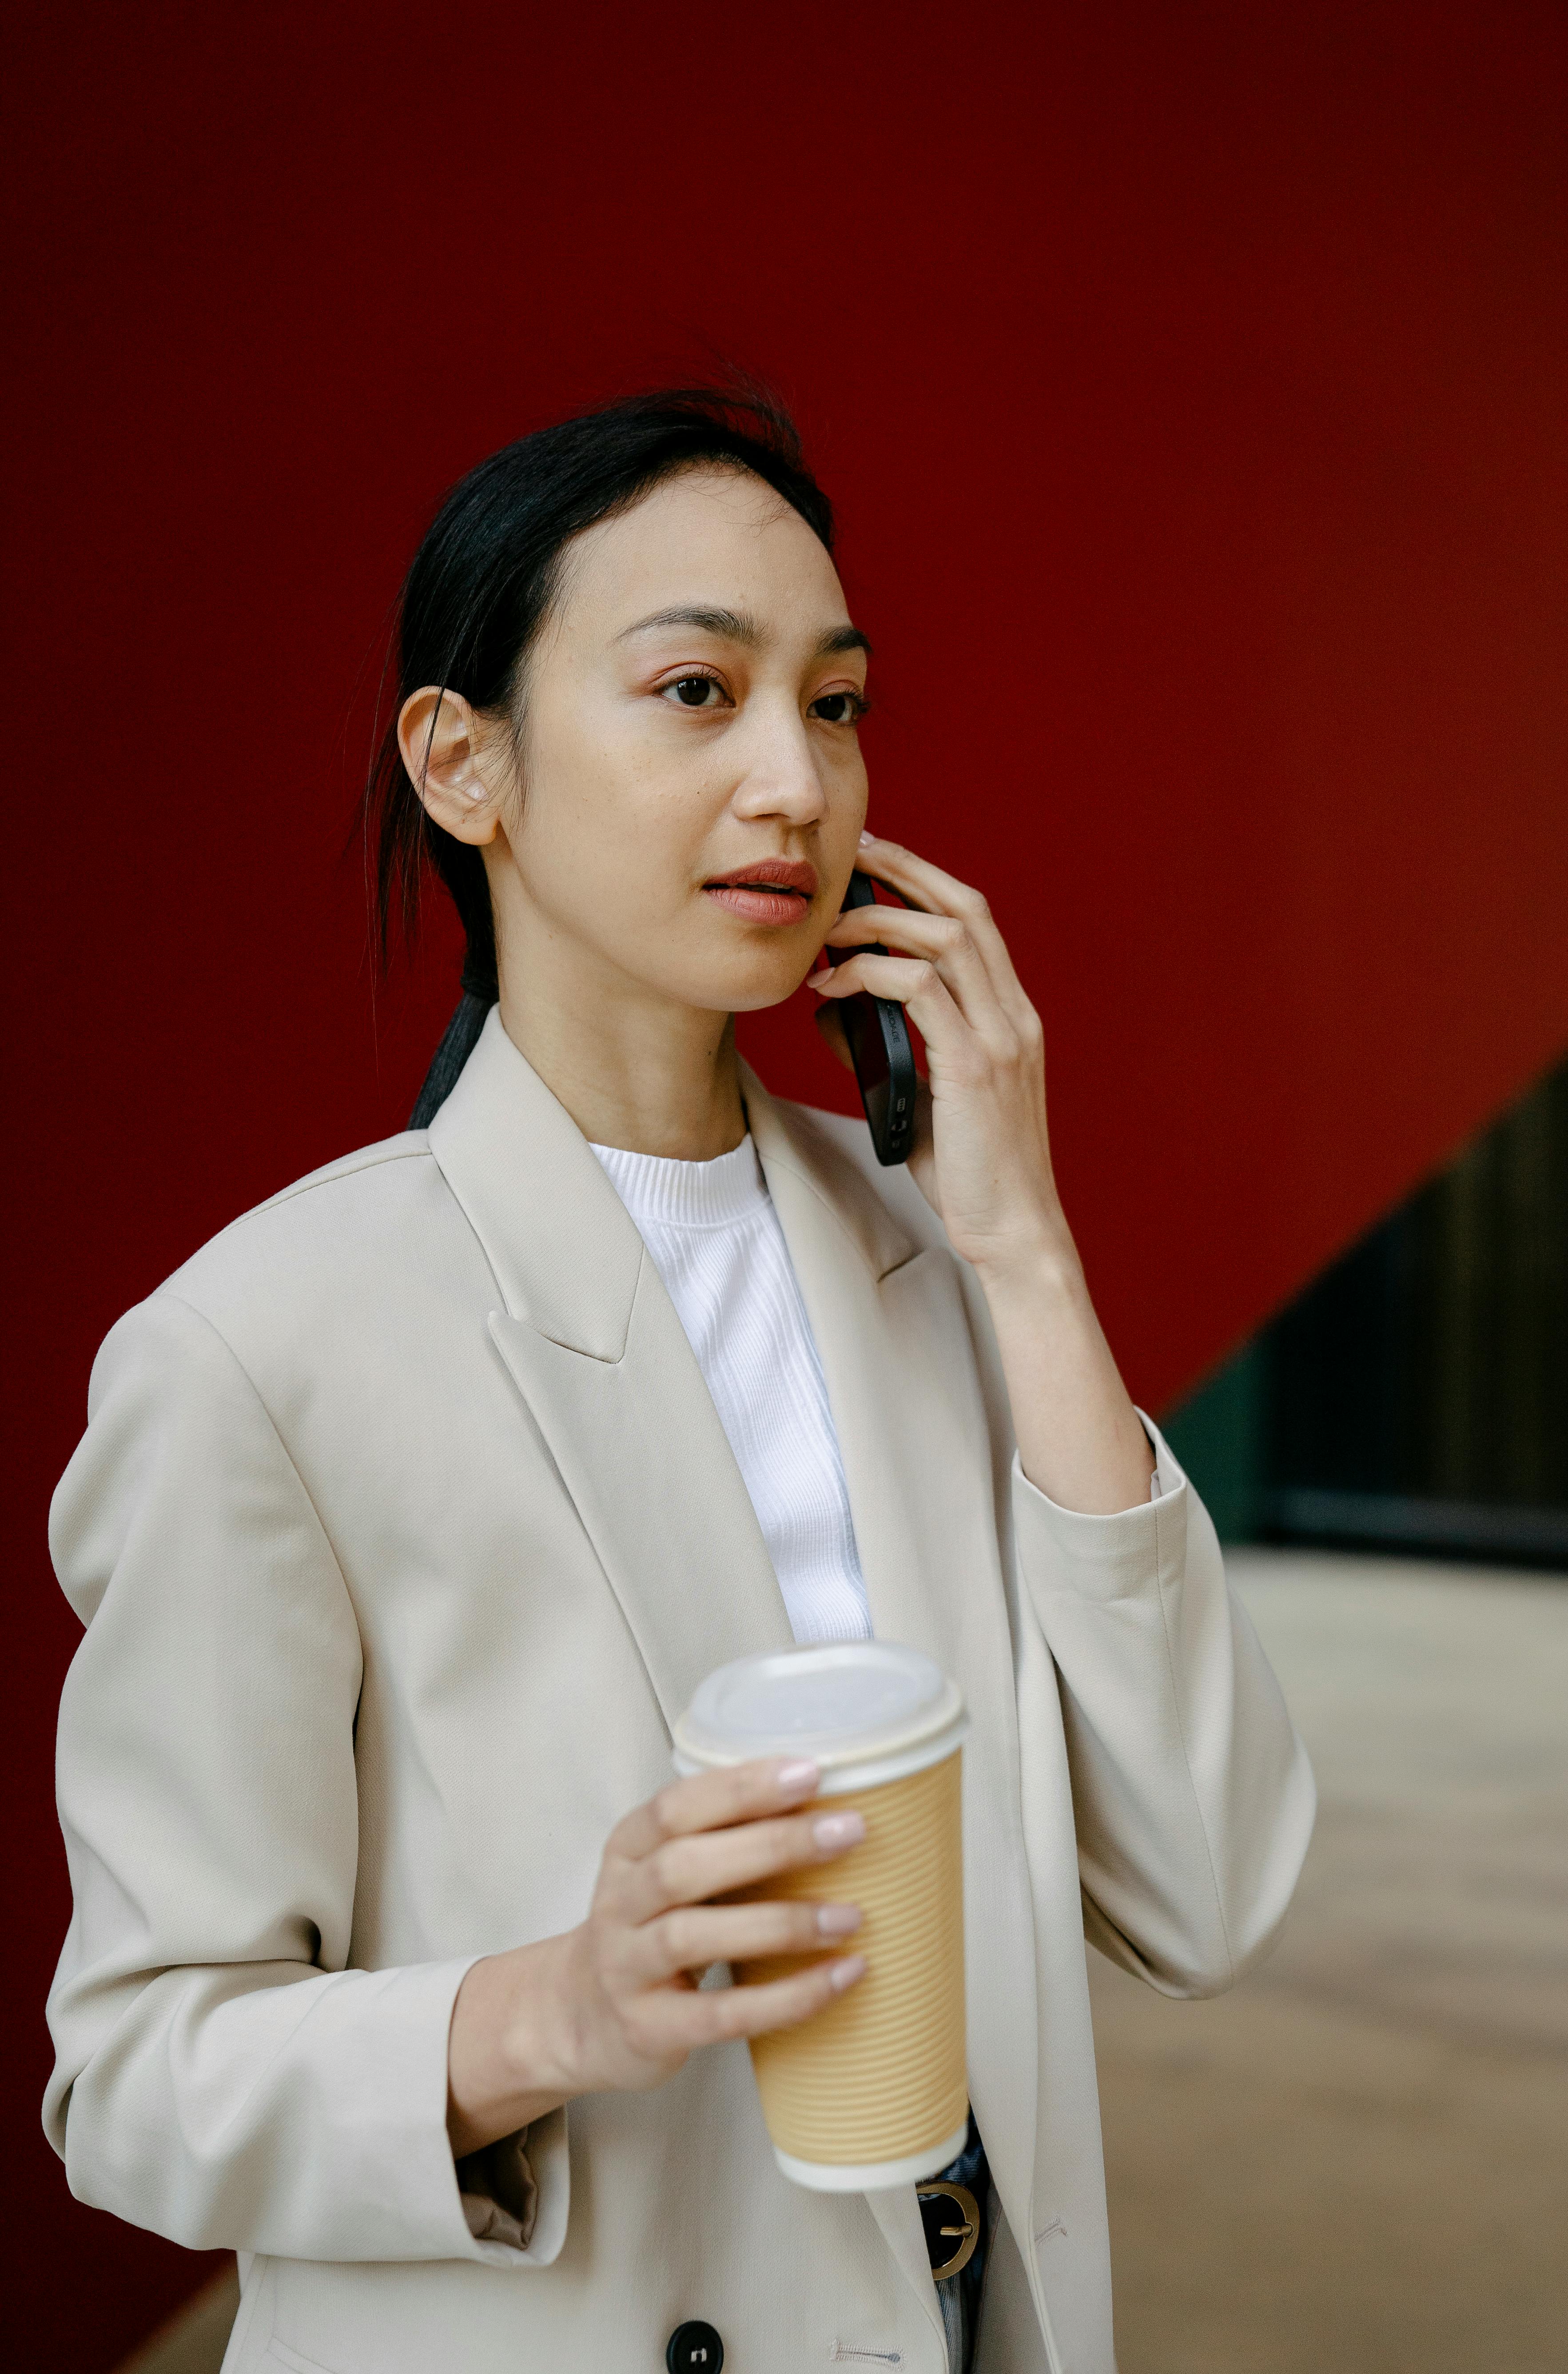 Woman making a call | Source: Pexels